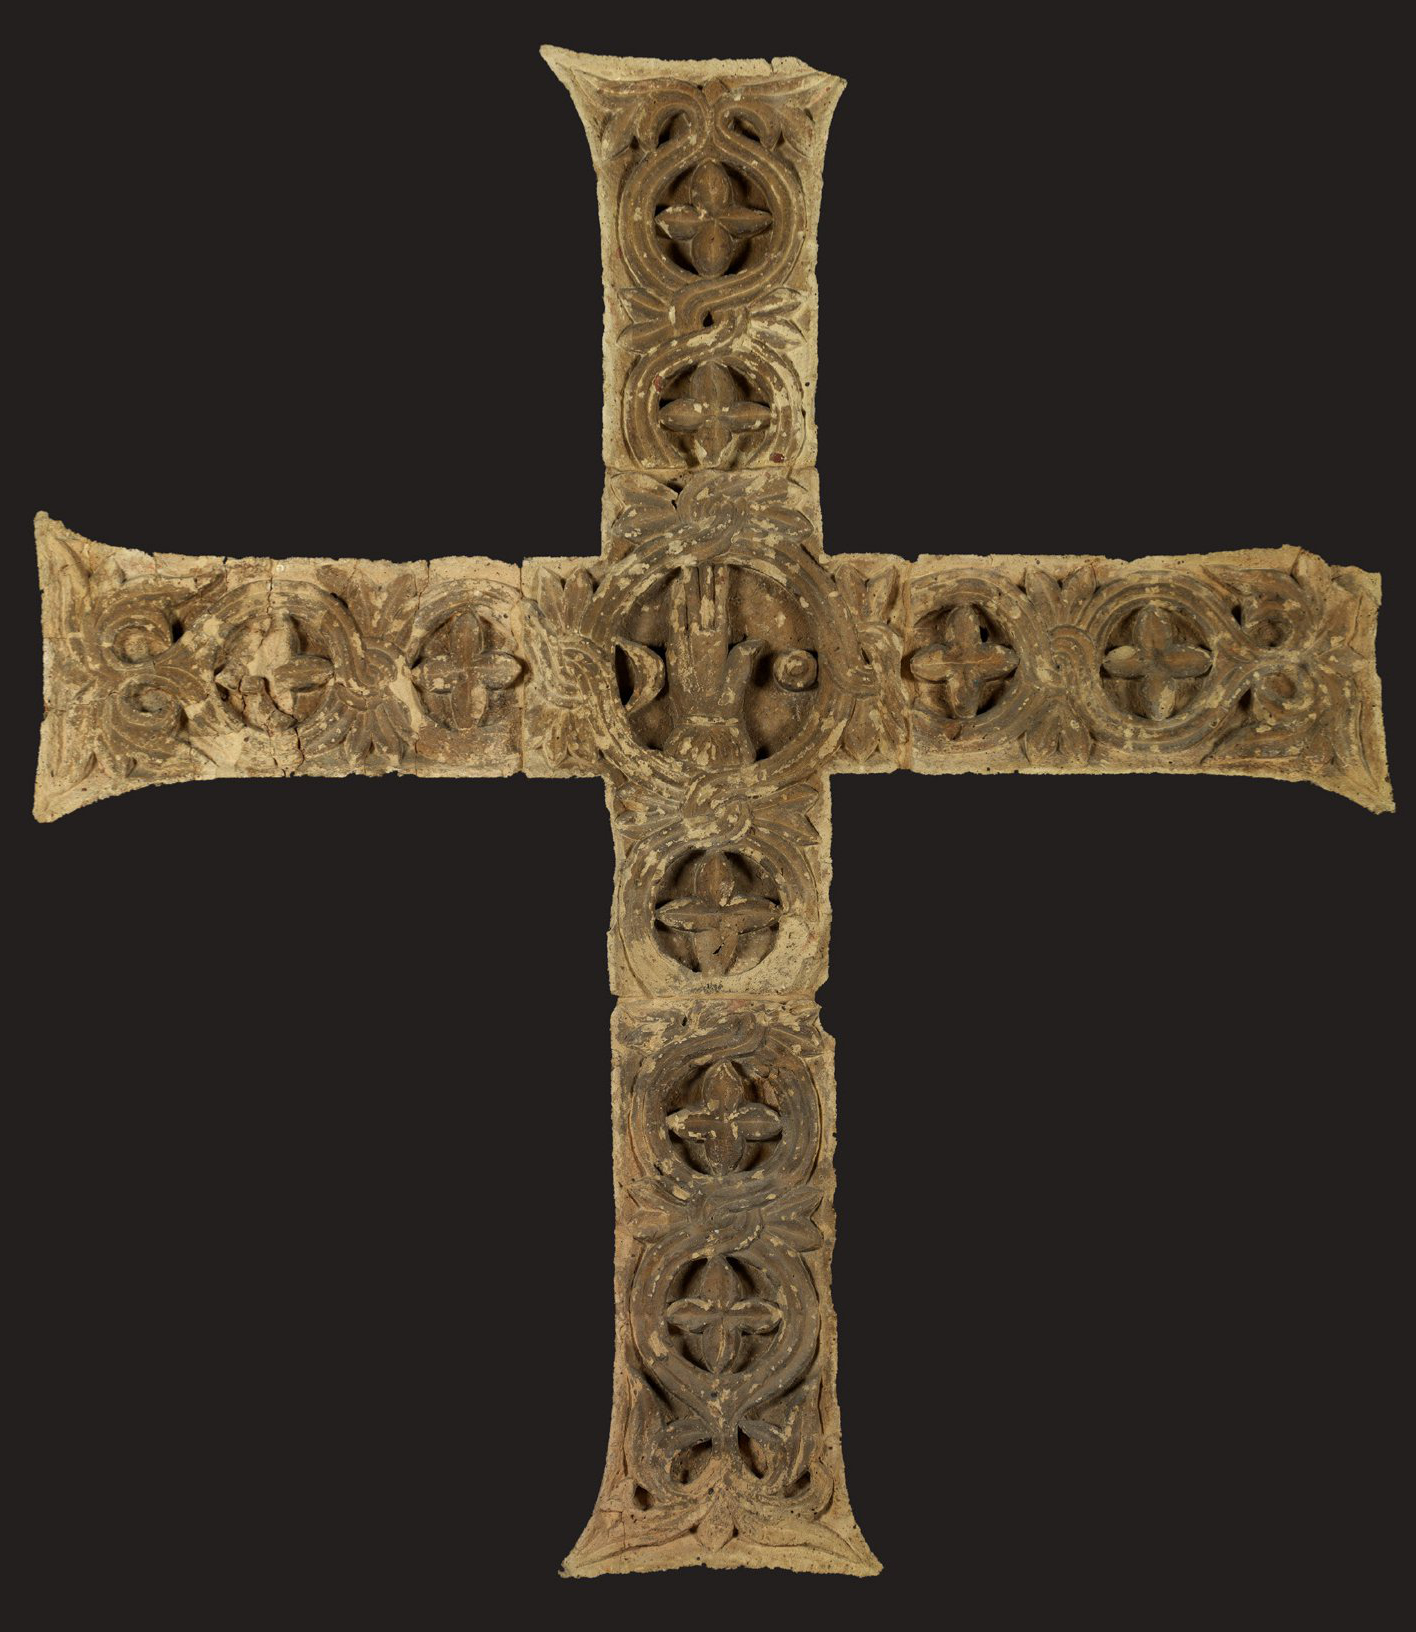 Ravenna, National Museum, the terracotta cross from Sant’Adalberto in Pereo (source: Direzione Musei Emilia-Romagna)